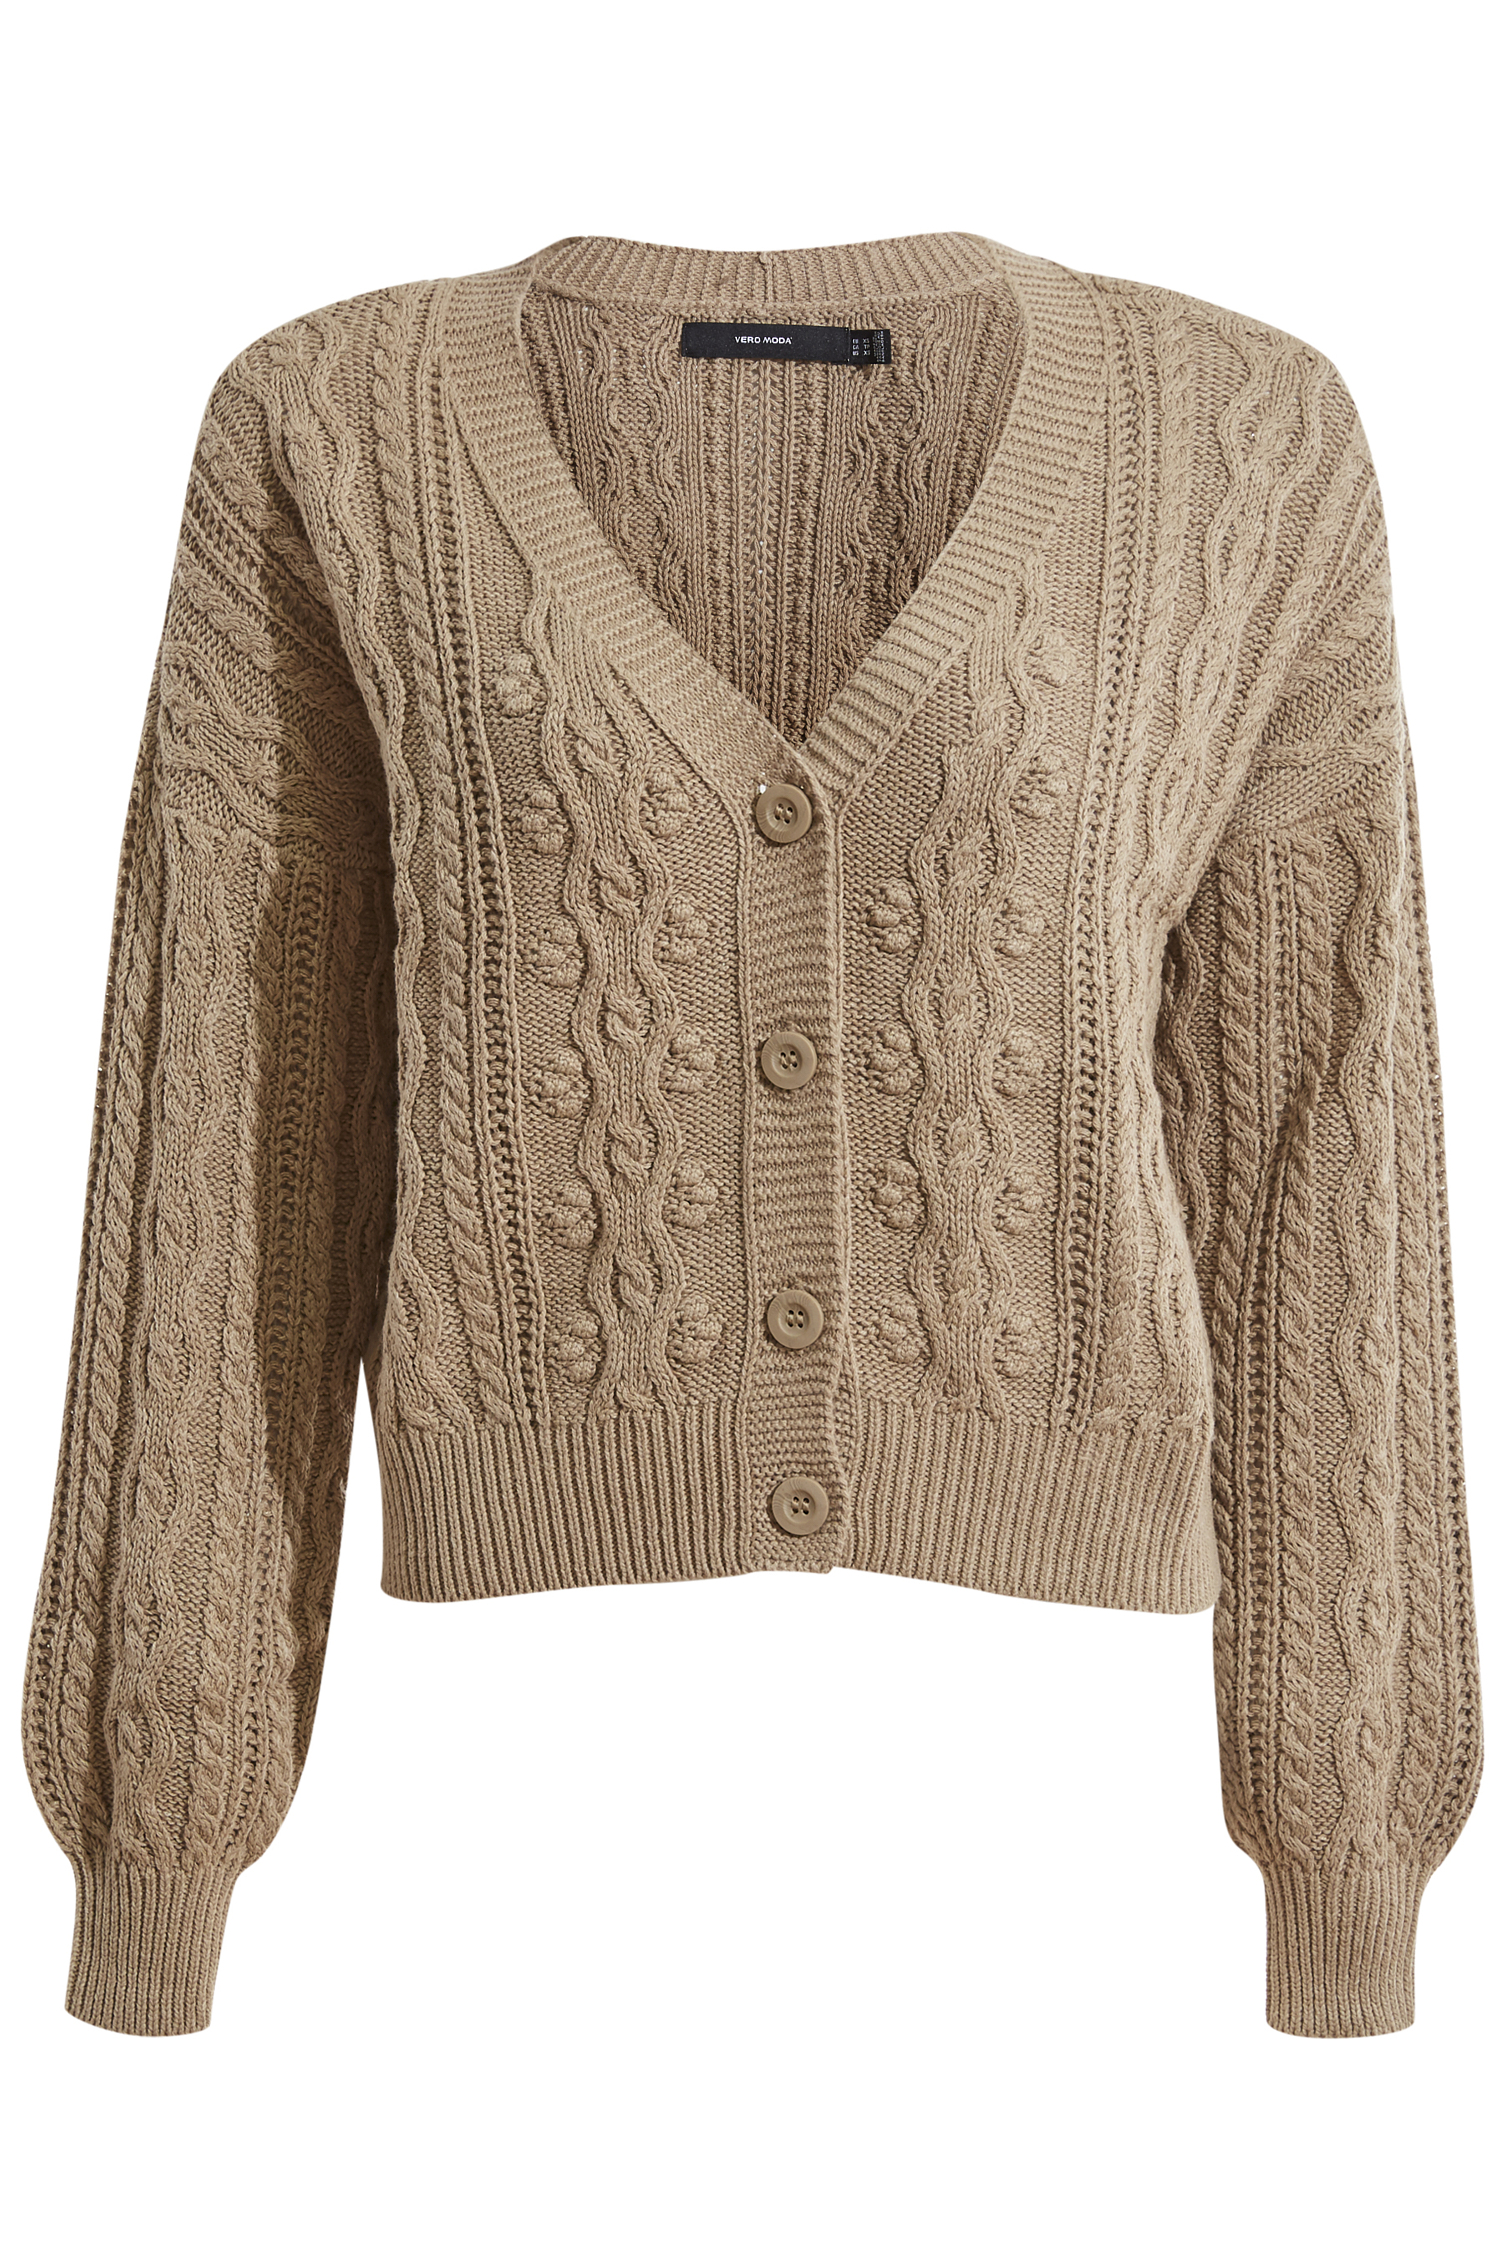 Vero Moda Knit Cardigan in Taupe S L | DAILYLOOK